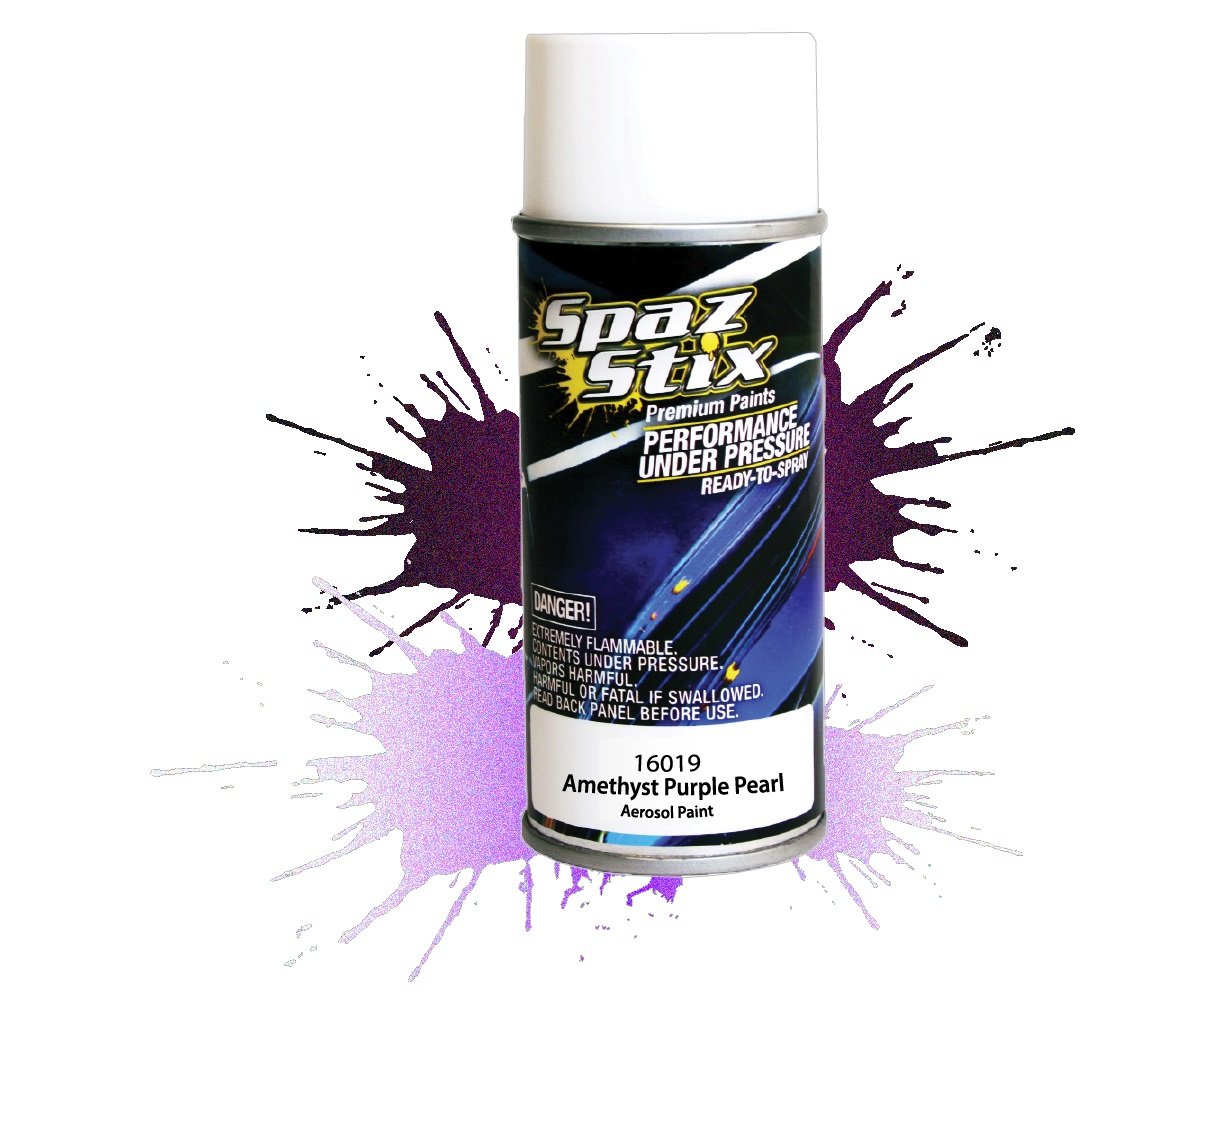 16019 Amethyst Purple Pearl Translucent Aerosol Paint 3.5 oz Bottle